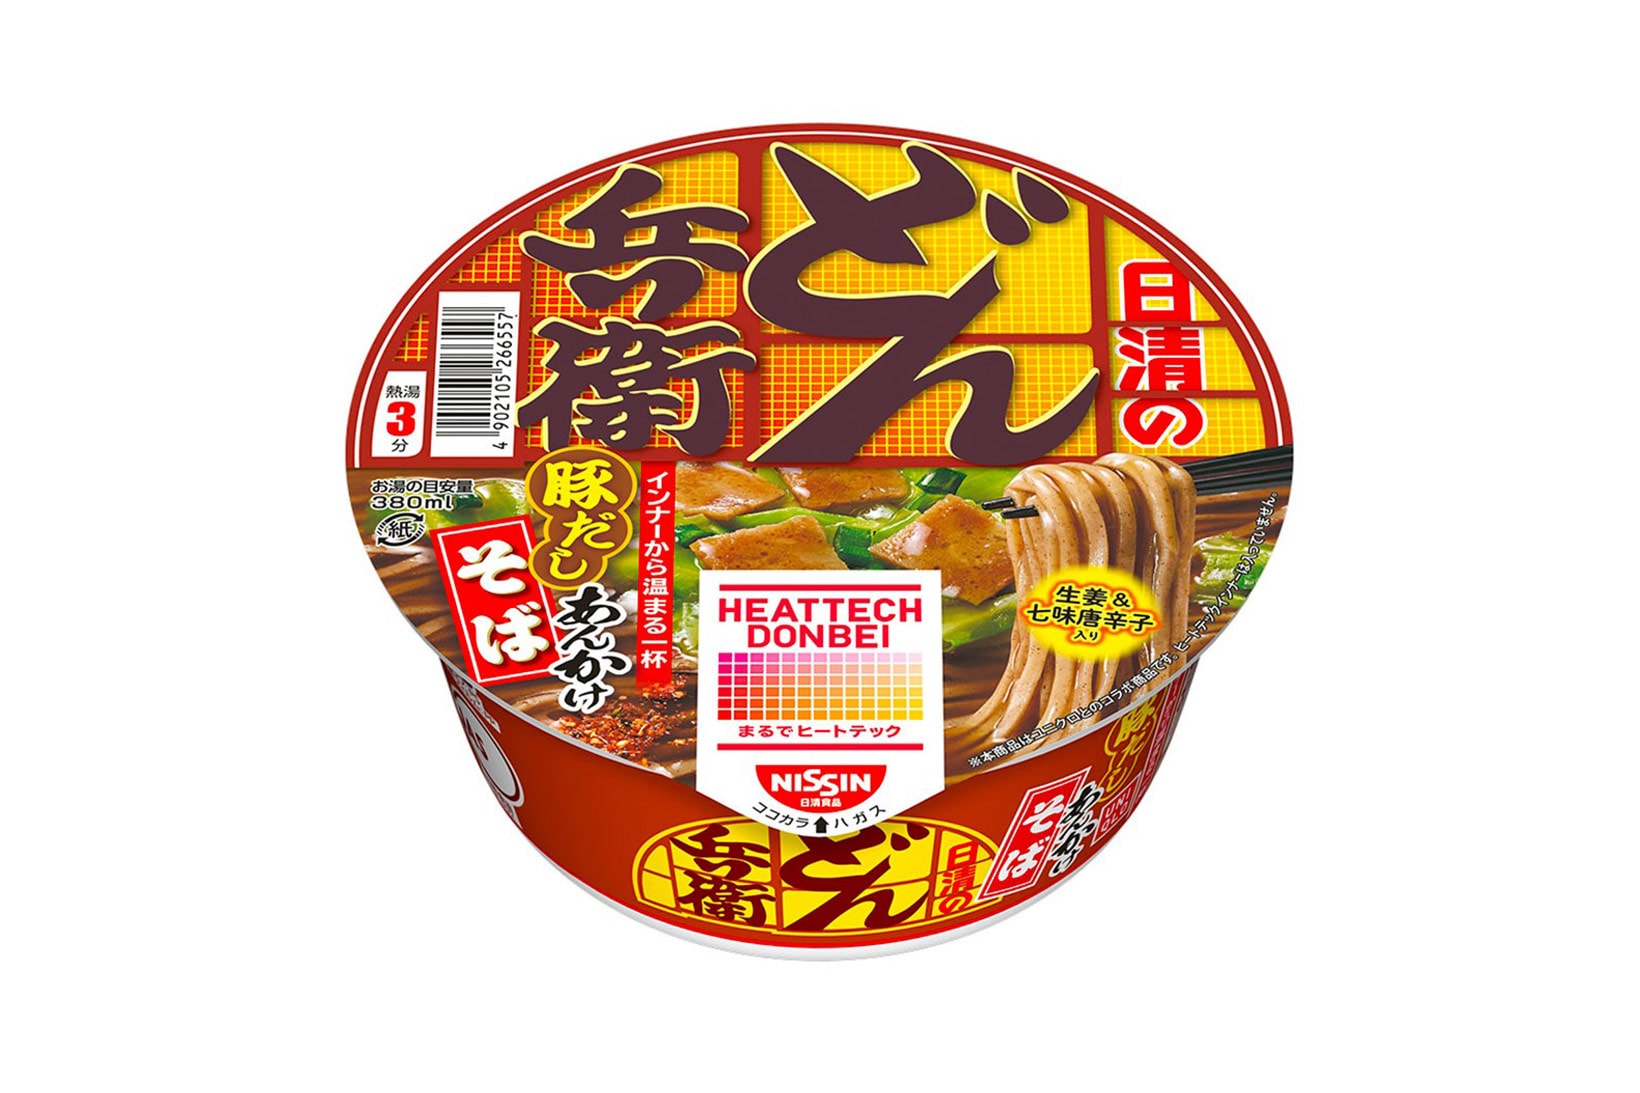 UNIQLO Nissin HEATTECH Donbei Pork Dashi Ankake Soba Collaboration Snack Instant Noodles